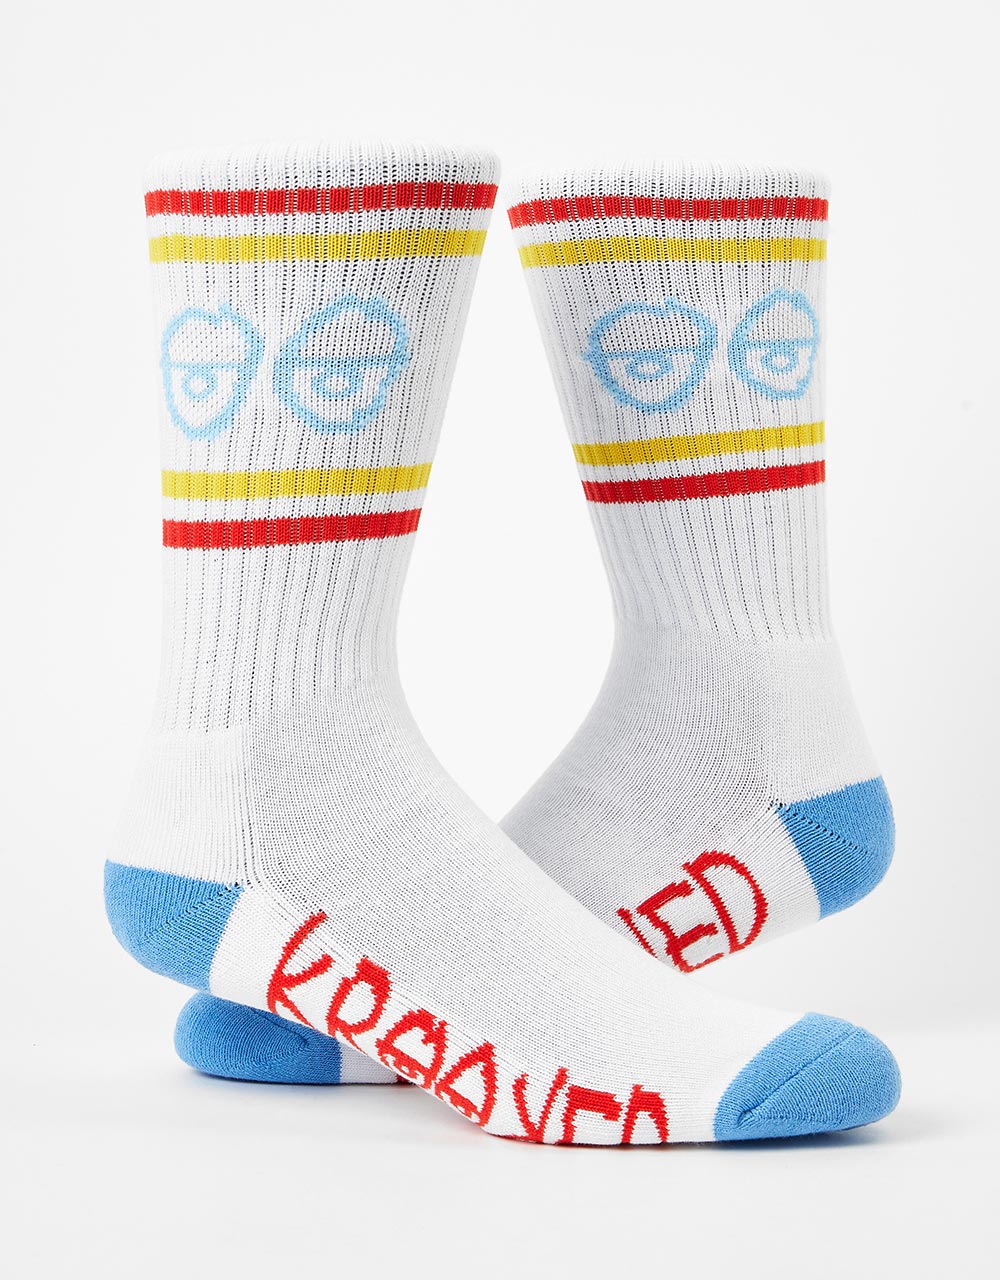 Krooked Eyes Socks - White/Blue/Yellow/Red